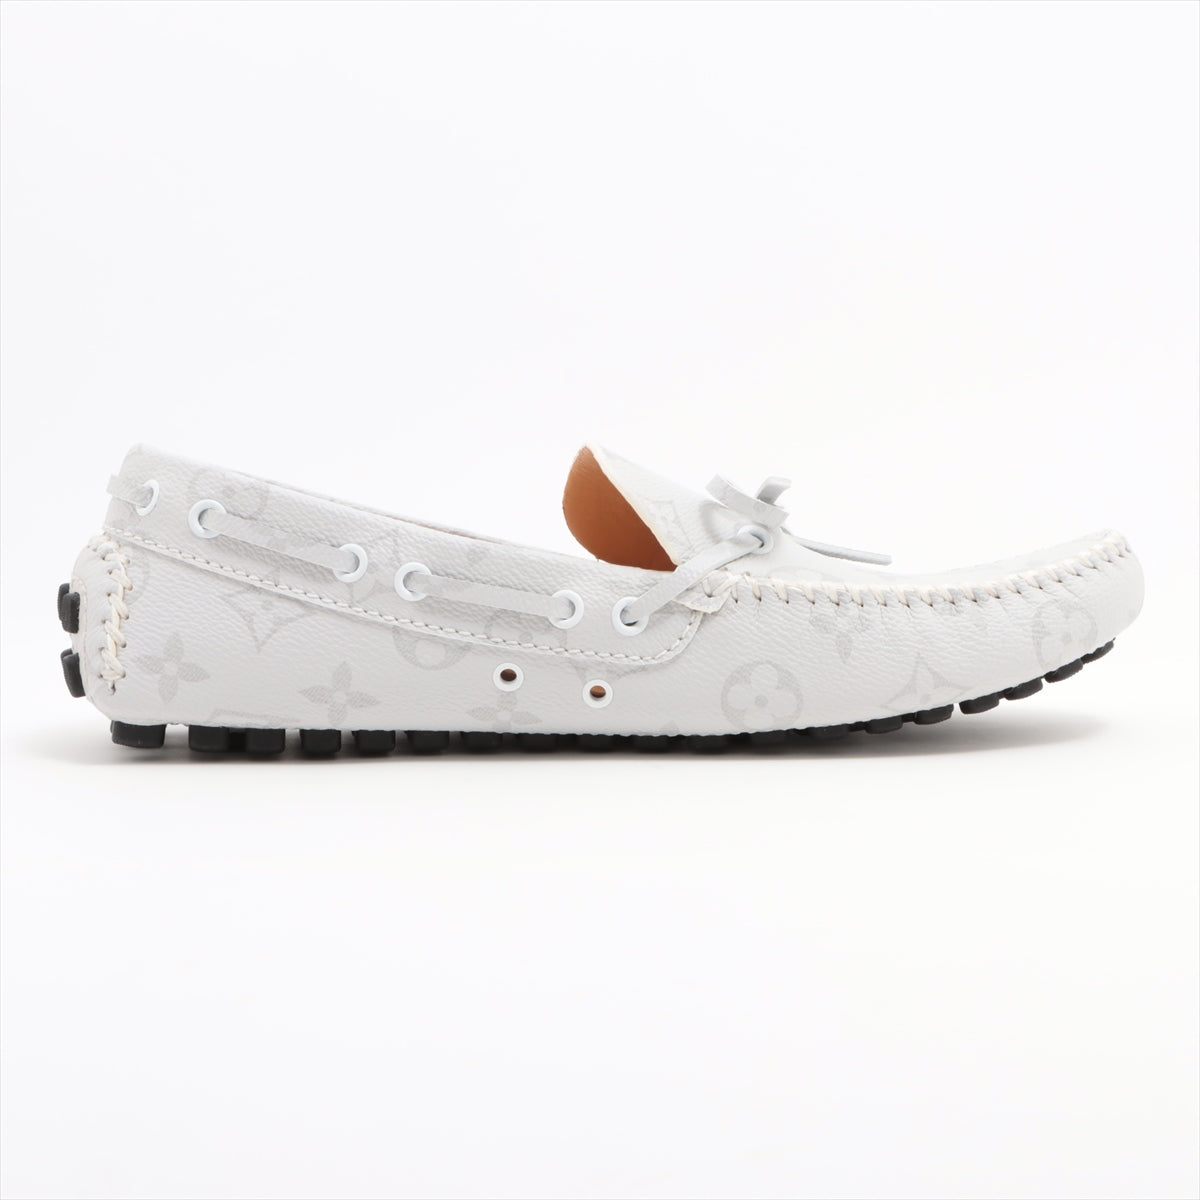 Louis Vuitton Arizona Line 19-year Leather Driving shoes 6.5 Men's Gray x white ND0139 Monogram